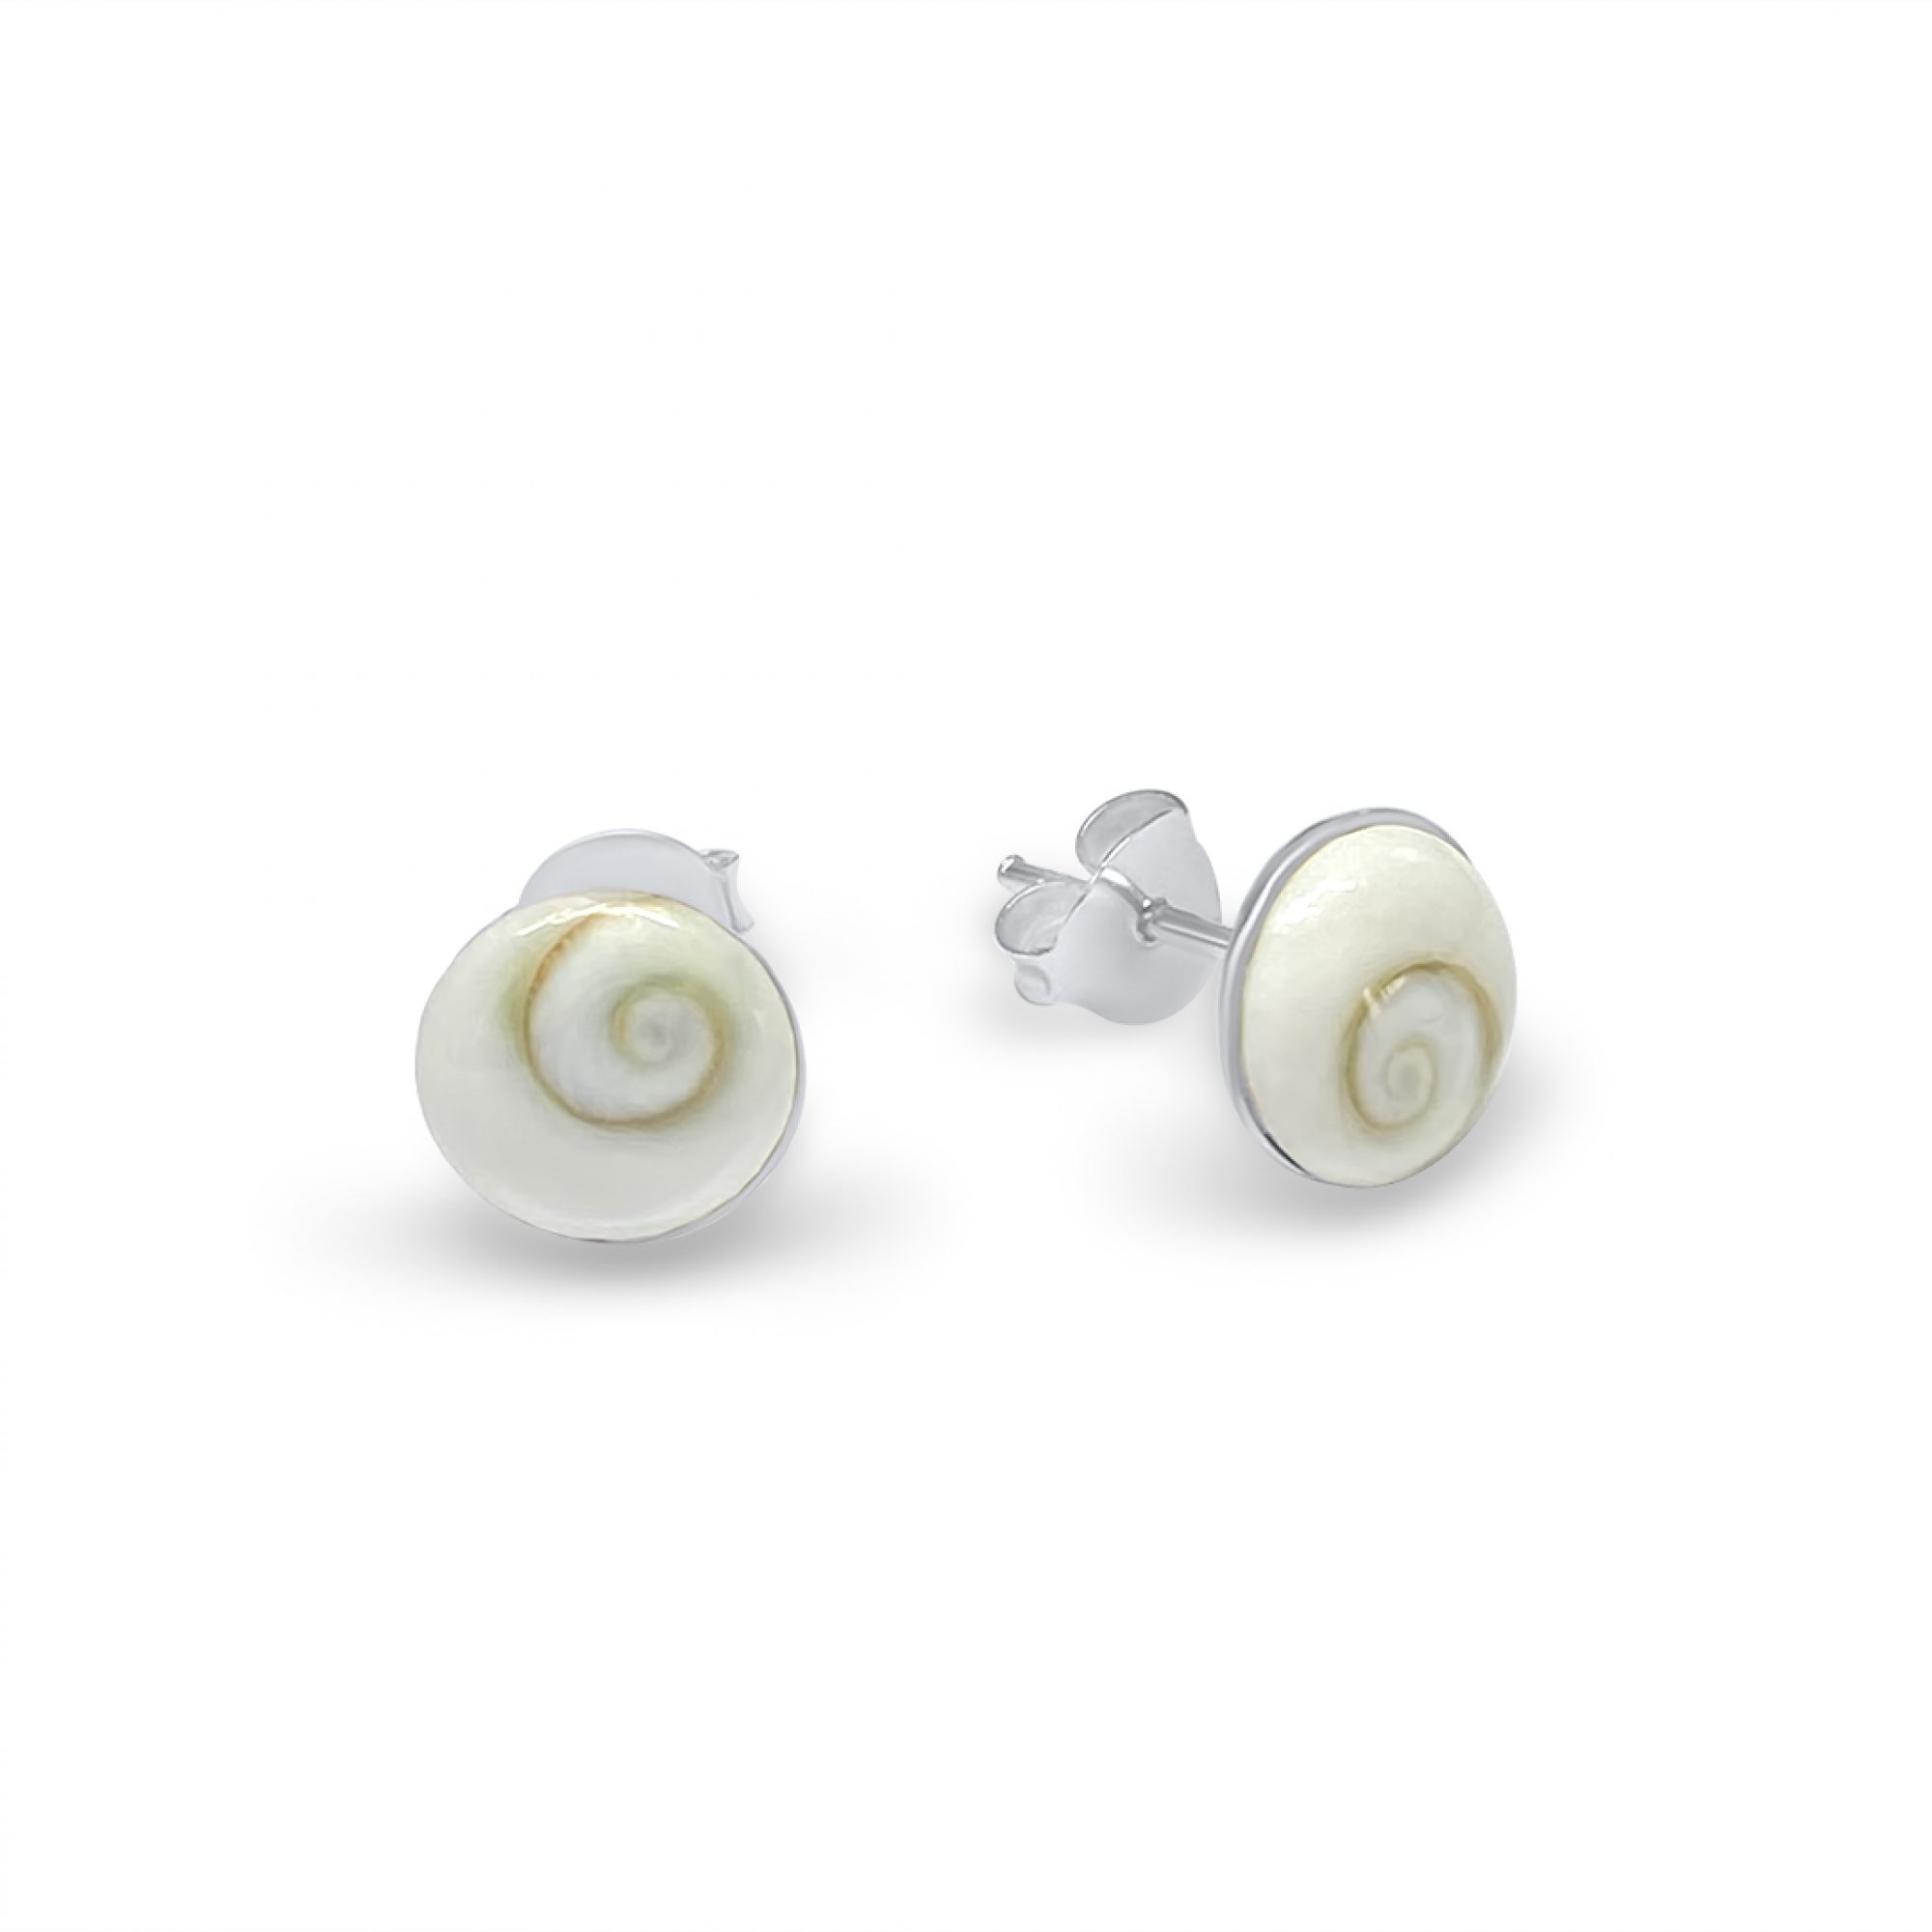 Eye of the sea stud earrings